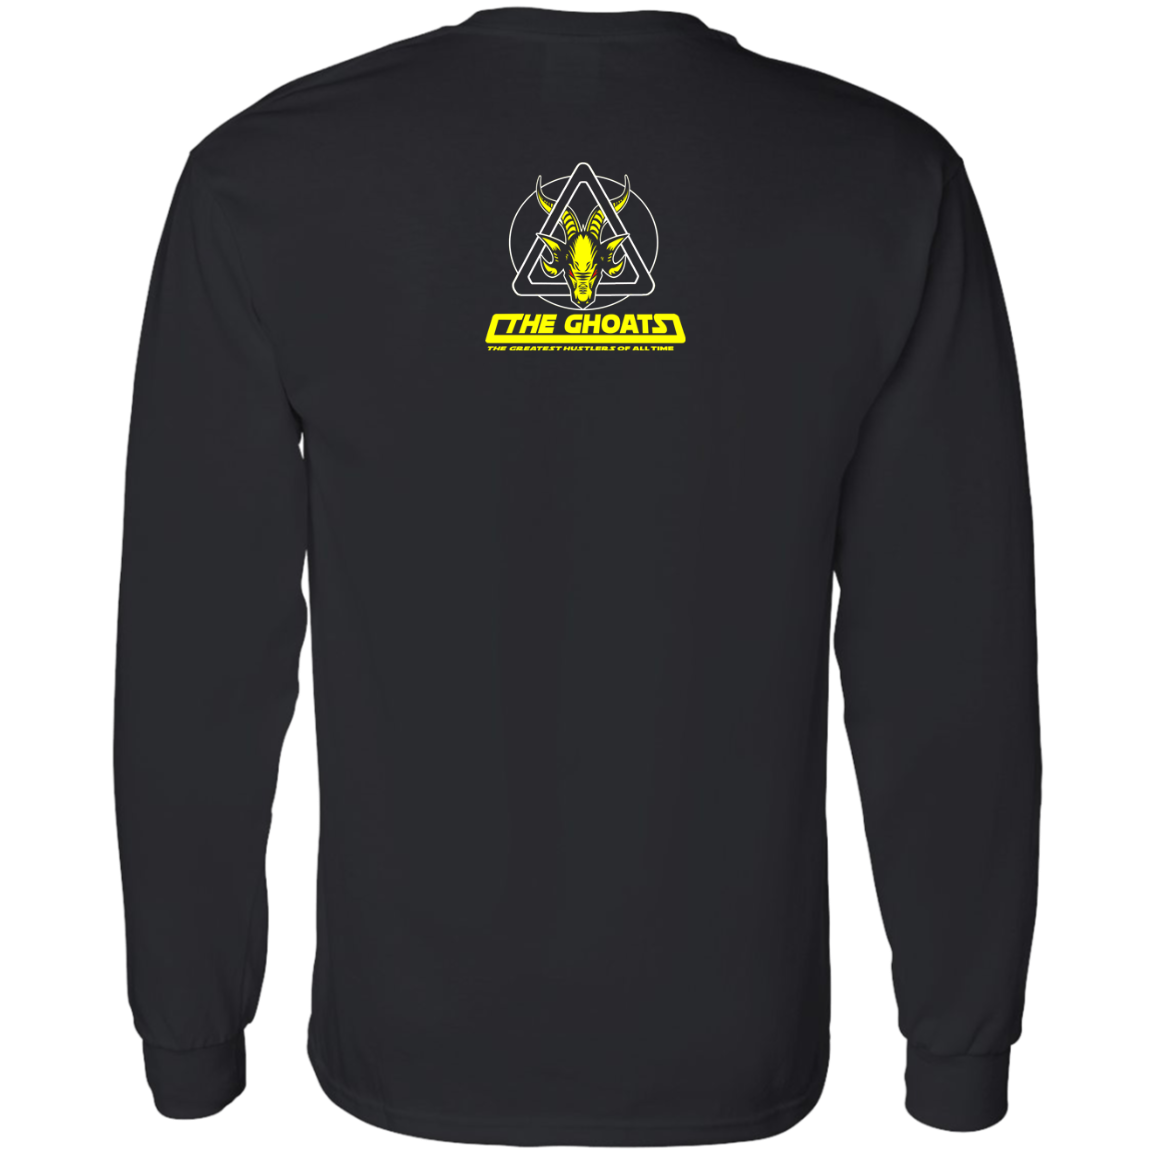 The GHOATS Custom Design. # 39 The Dark Side of Hustling. LS T-Shirt 5.3 oz.